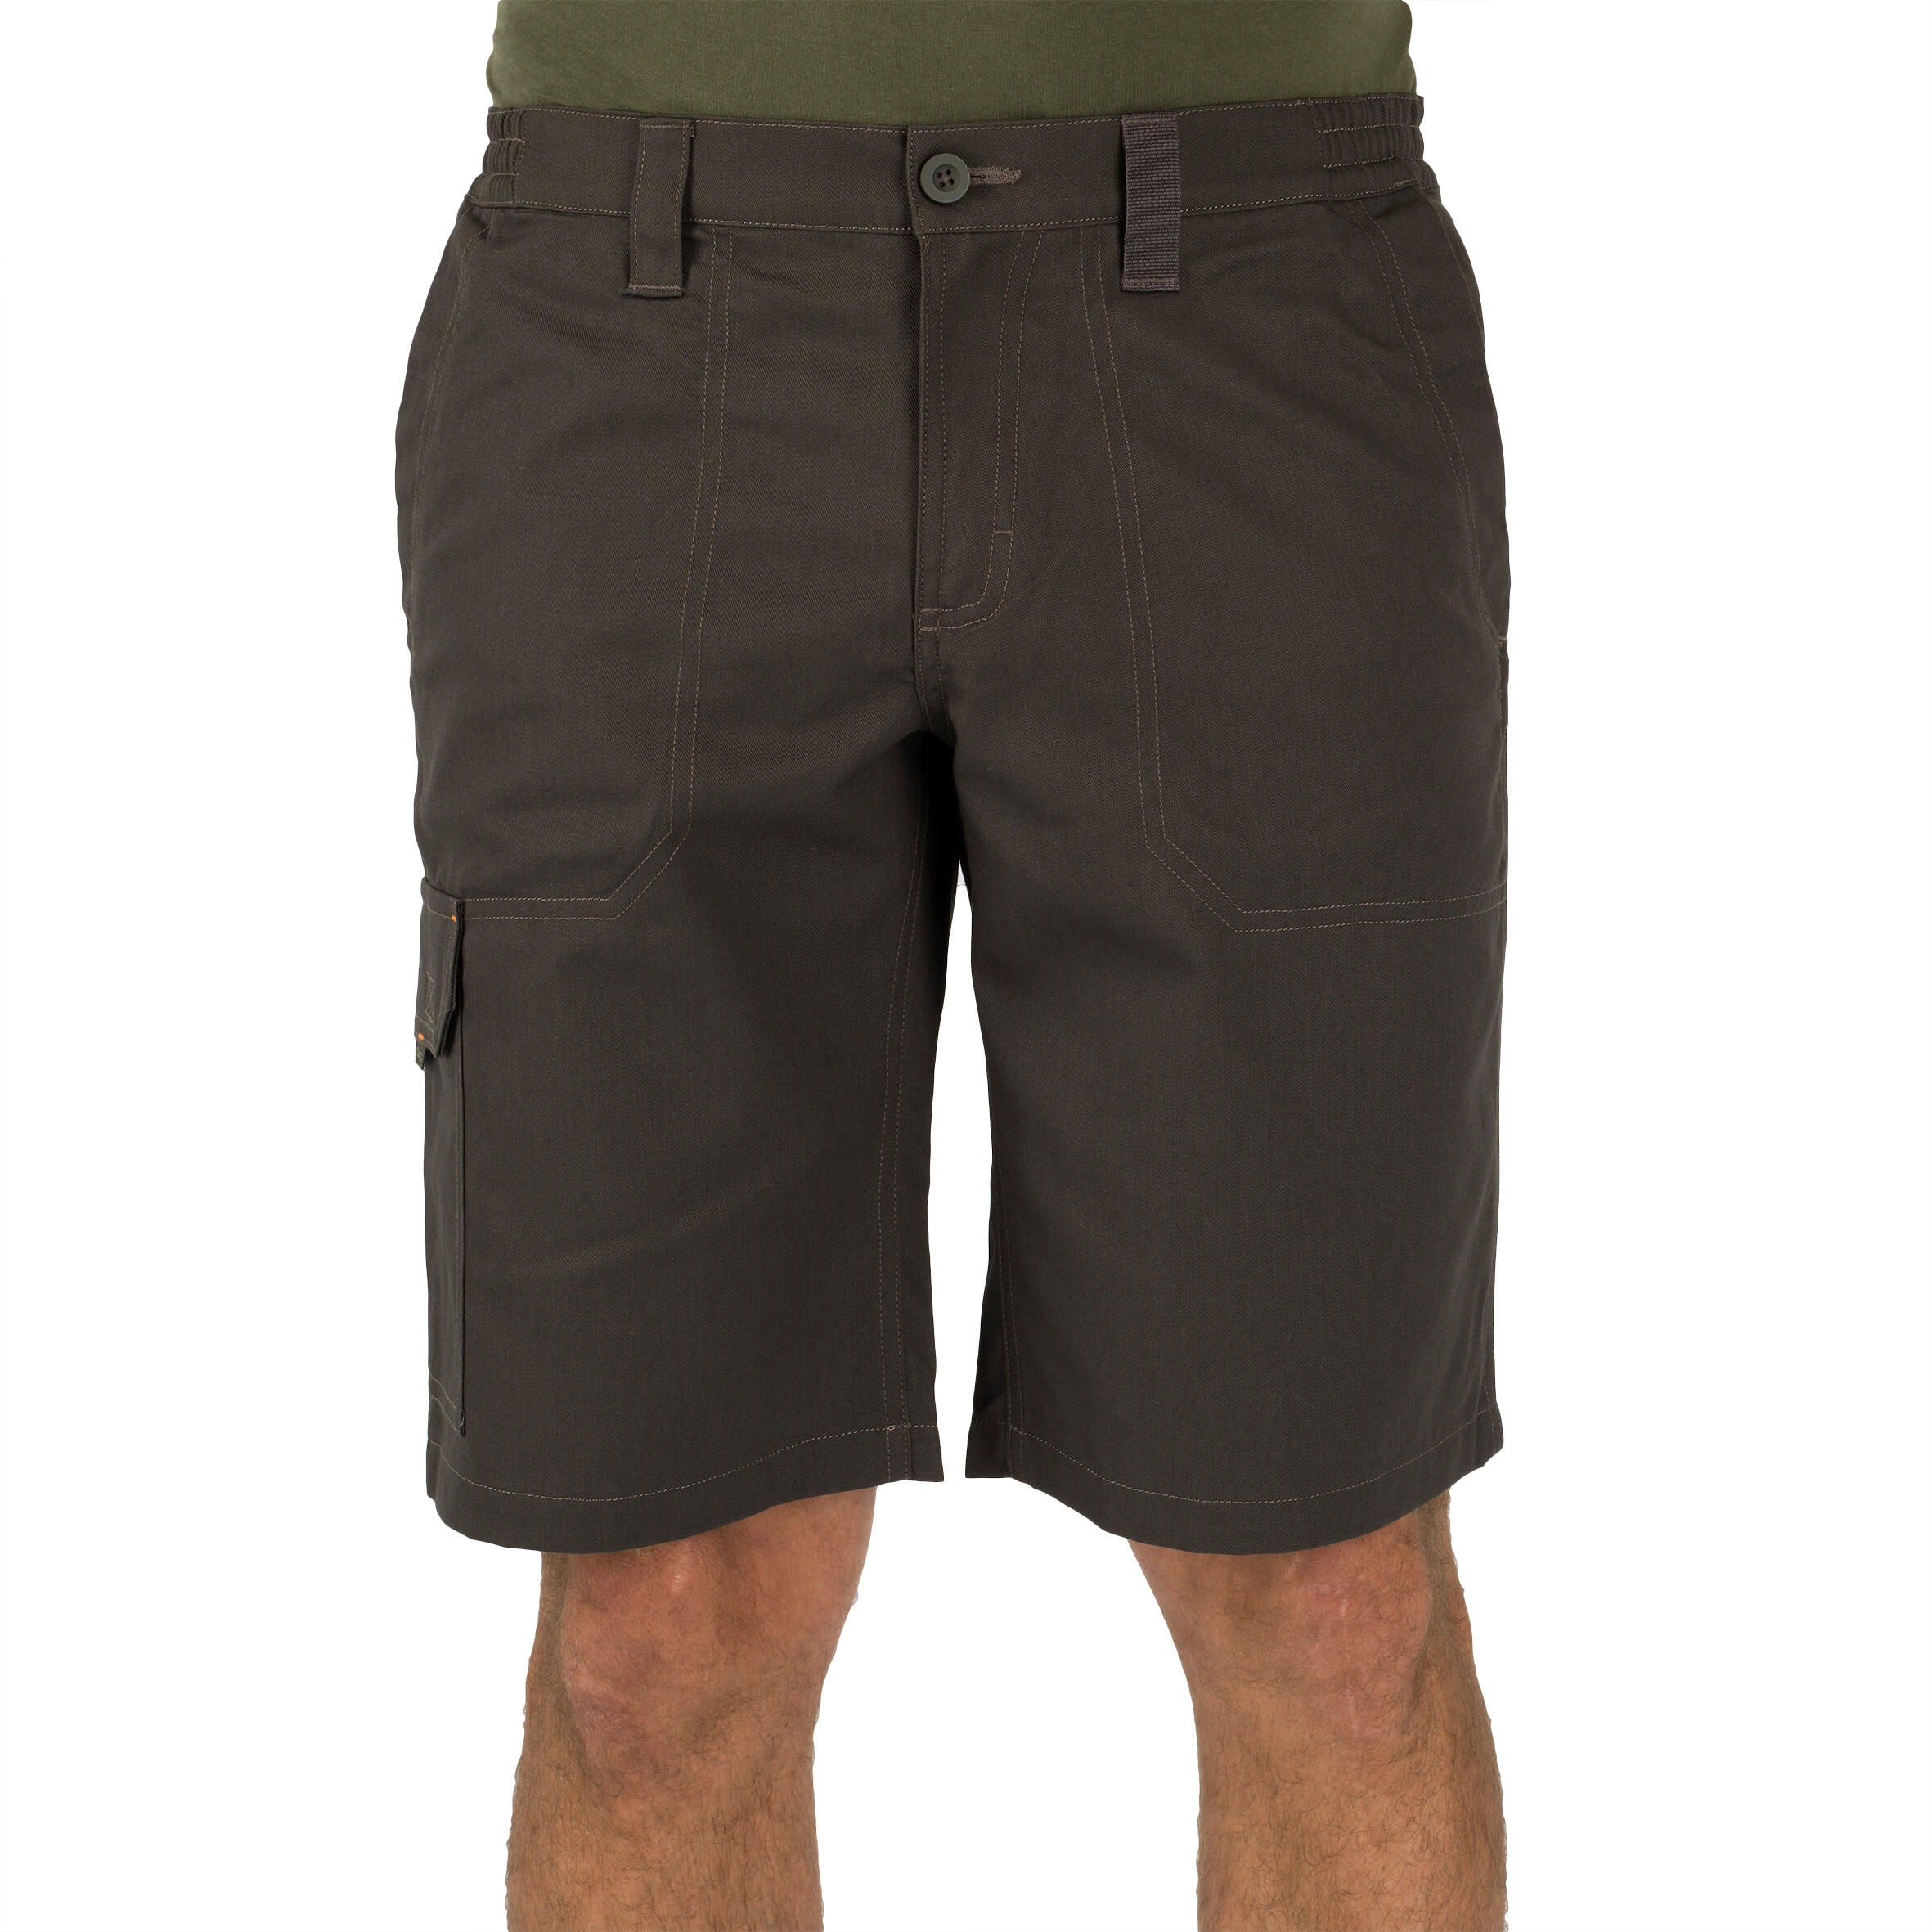 100 Bermuda shorts green - SOLOGNAC